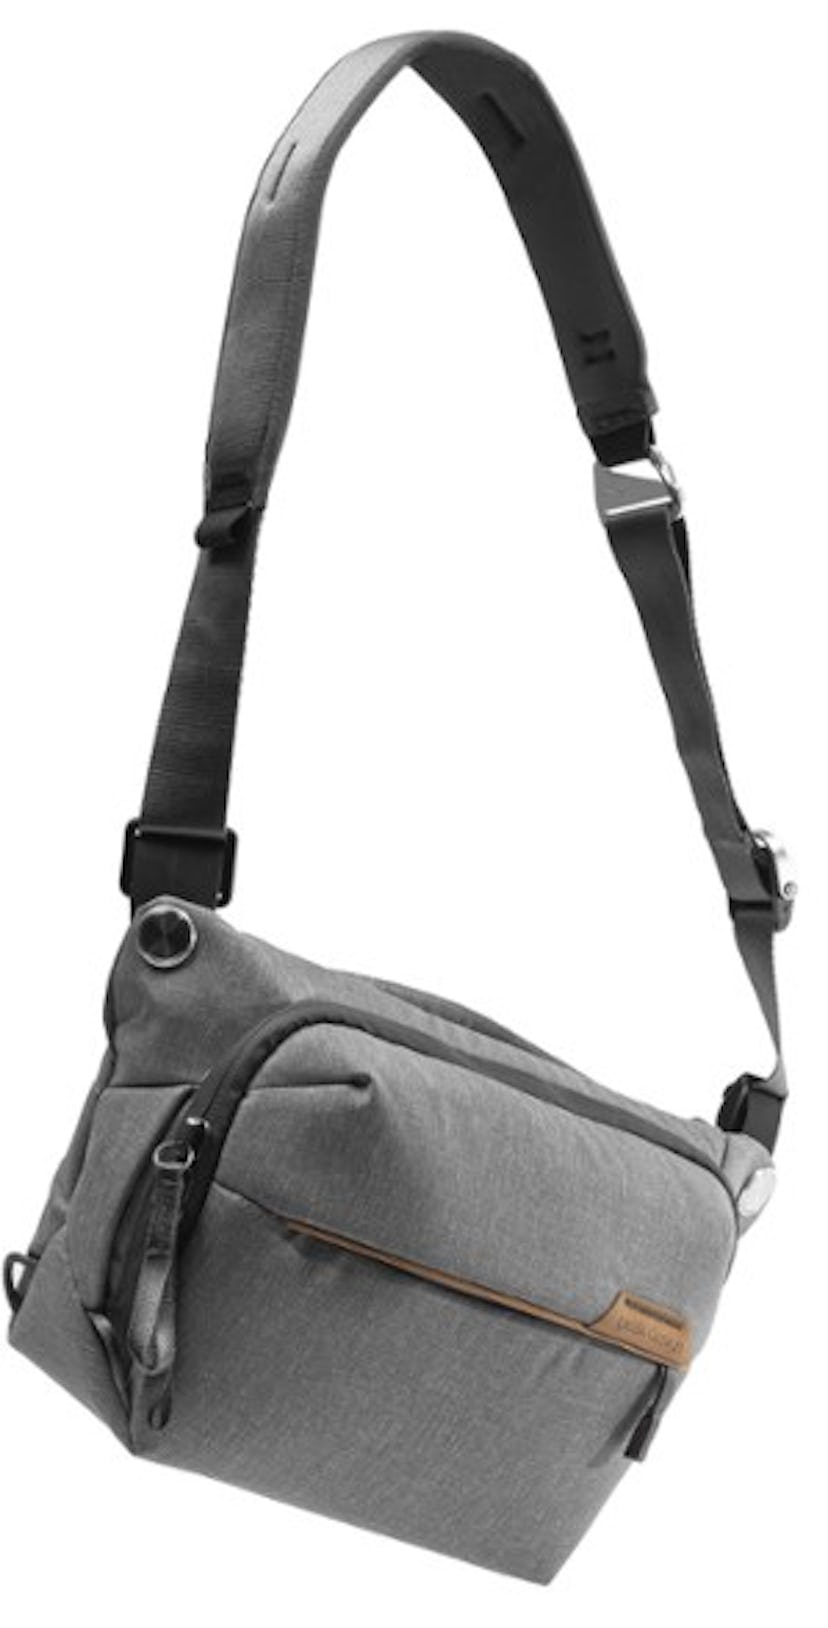 Peak Design Everyday Sling Camera Bag